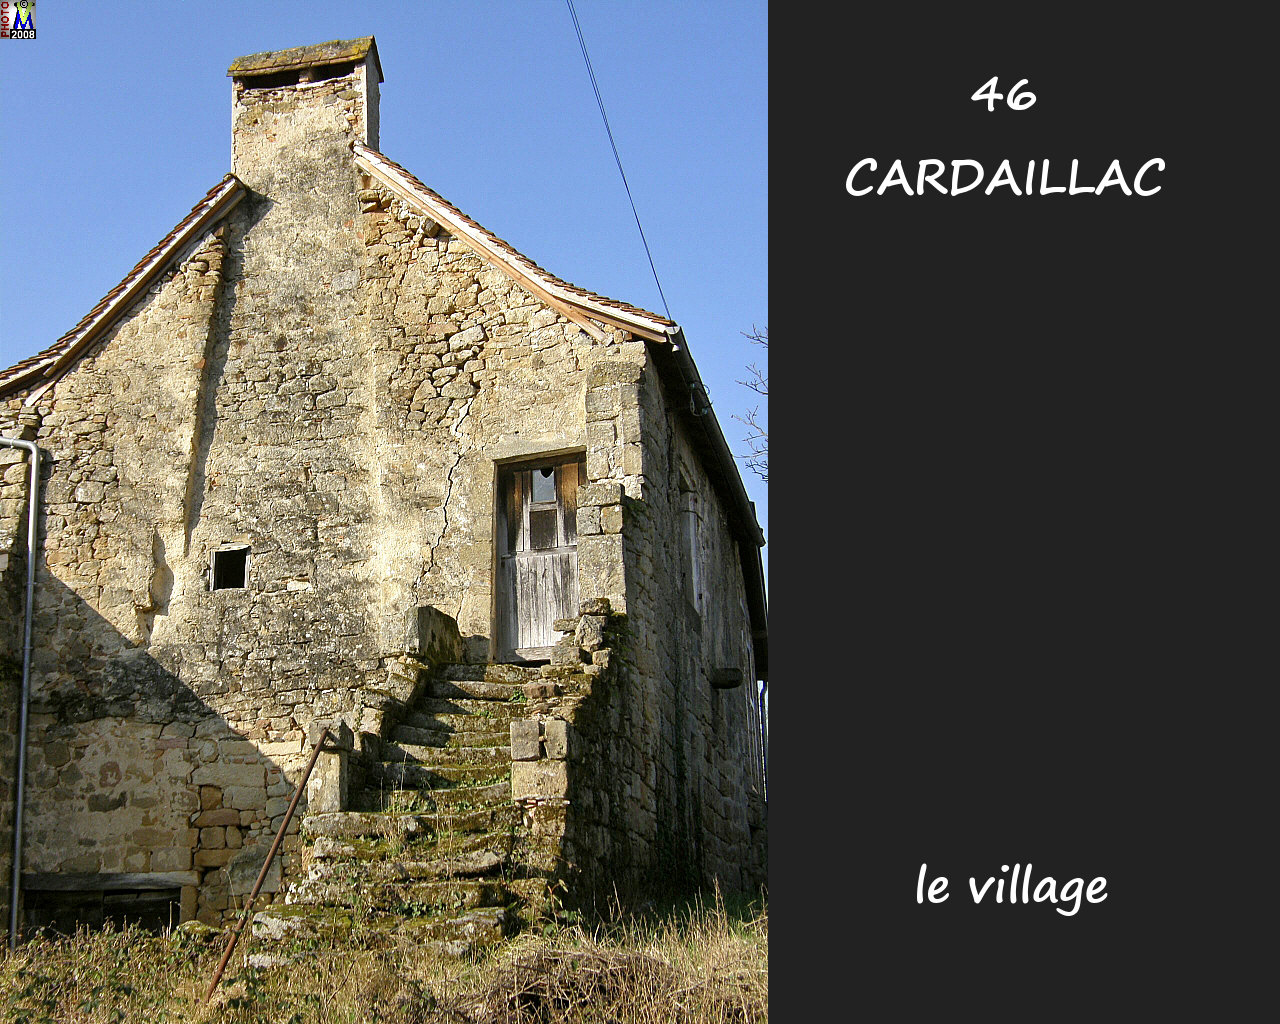 46CARDAILLAC_village_230.jpg